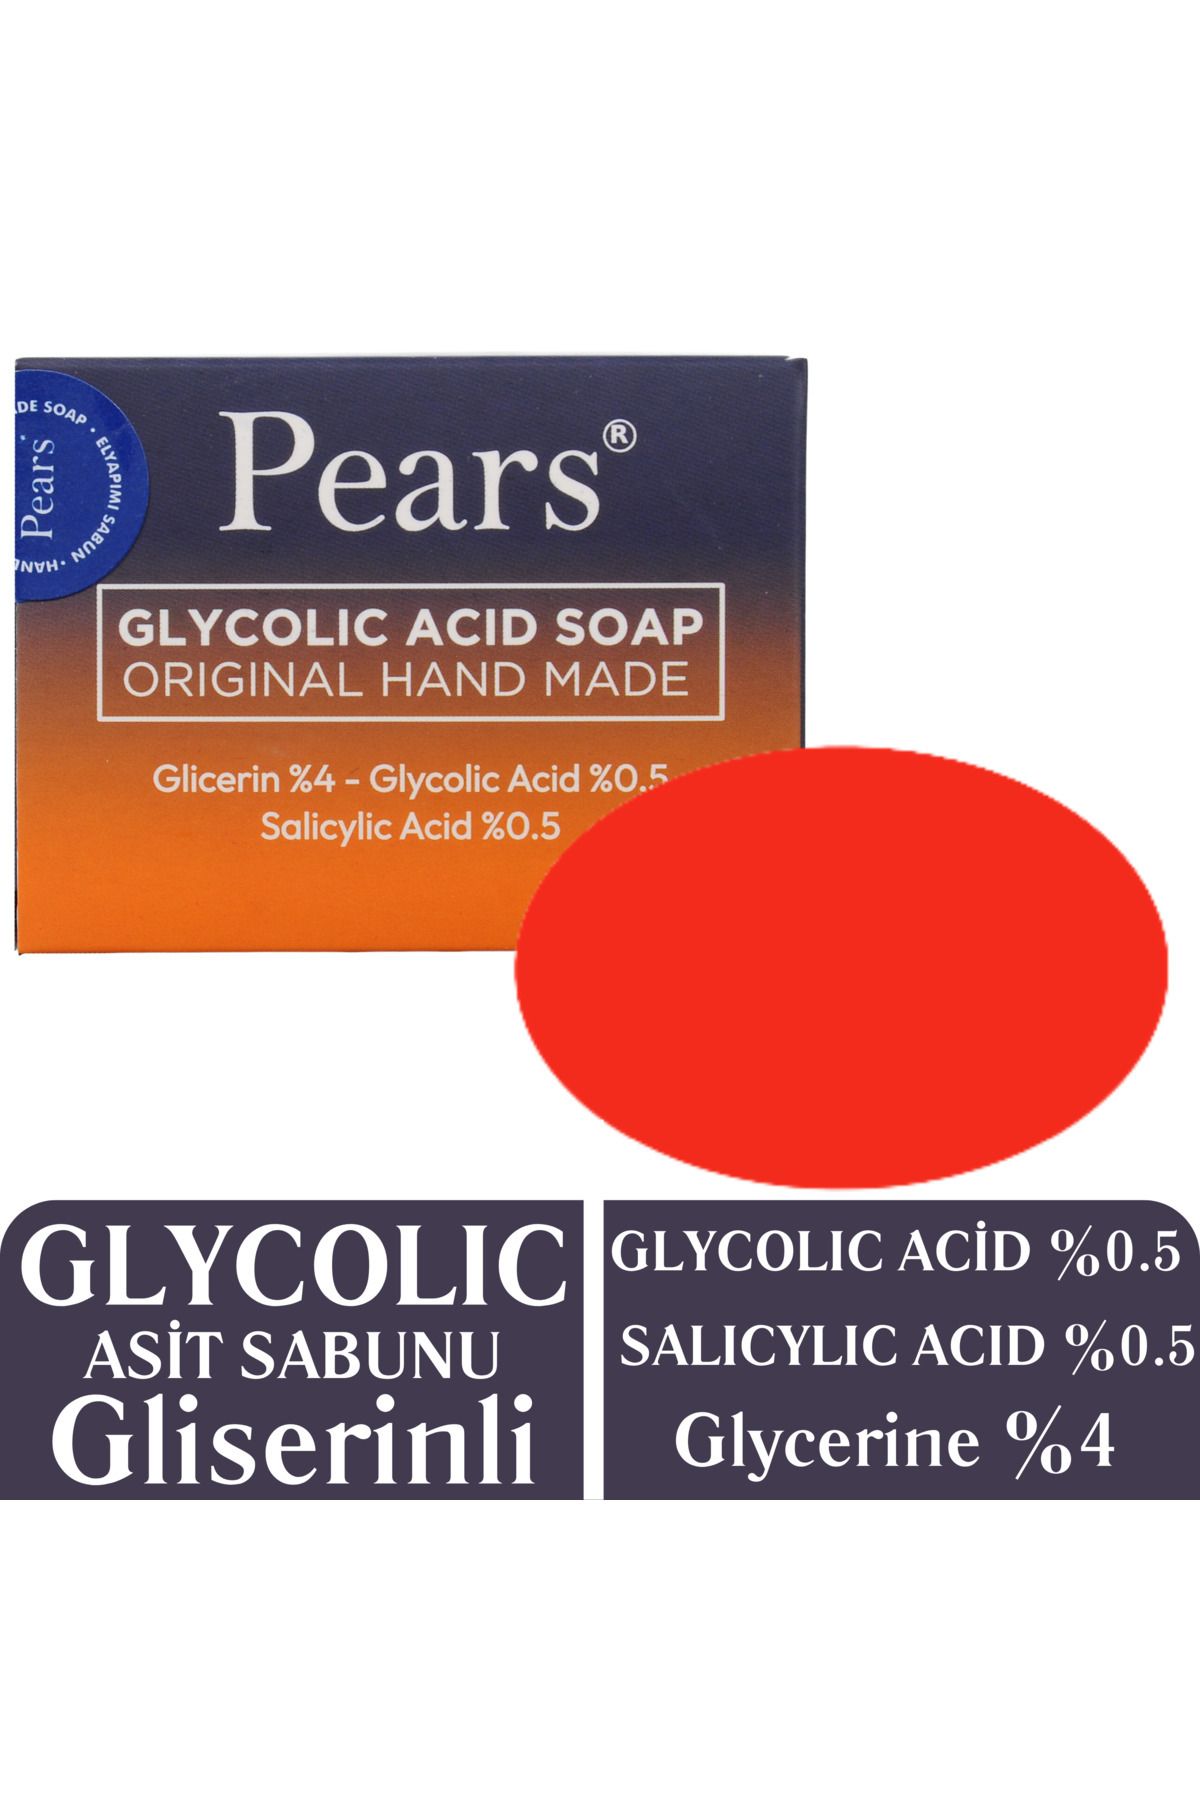 Pears Gliserinli Glikolik Asit Sabunu 120 gr - Glycolic Acid Soap With Glycerine 120 gr